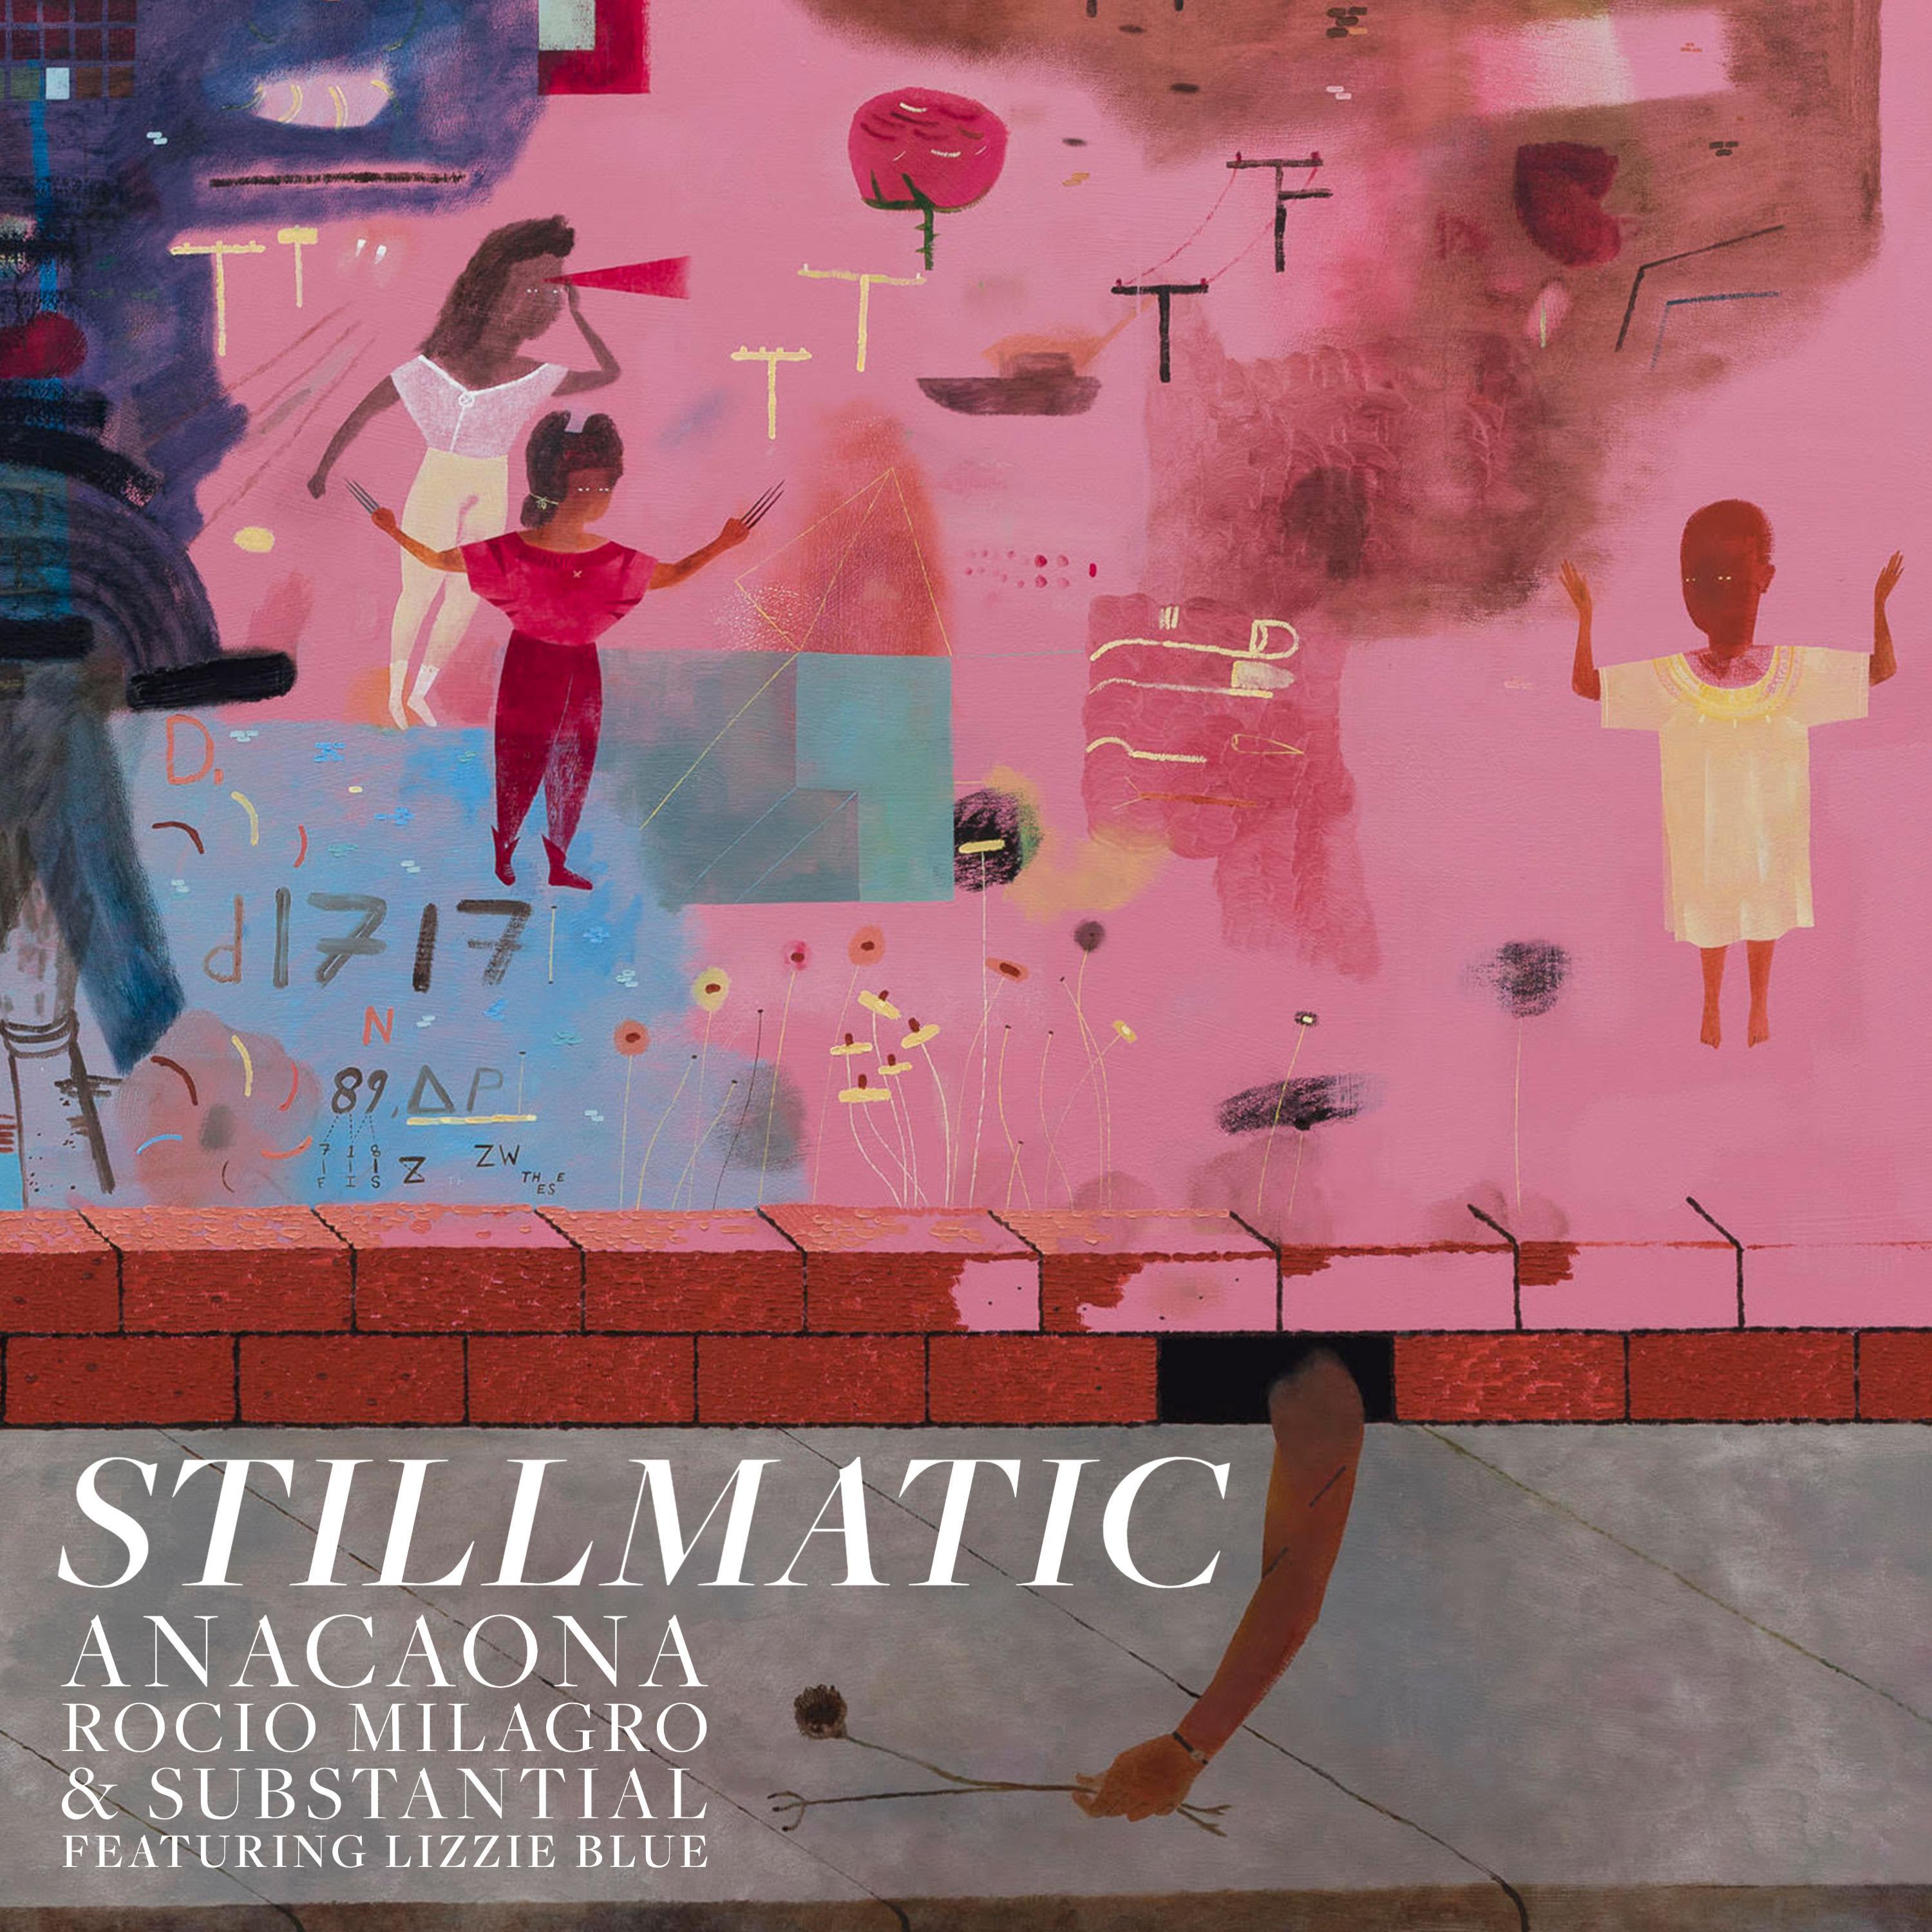 Anacaona Rocio Milagro - Stillmatic (feat. Lizzie Blue)